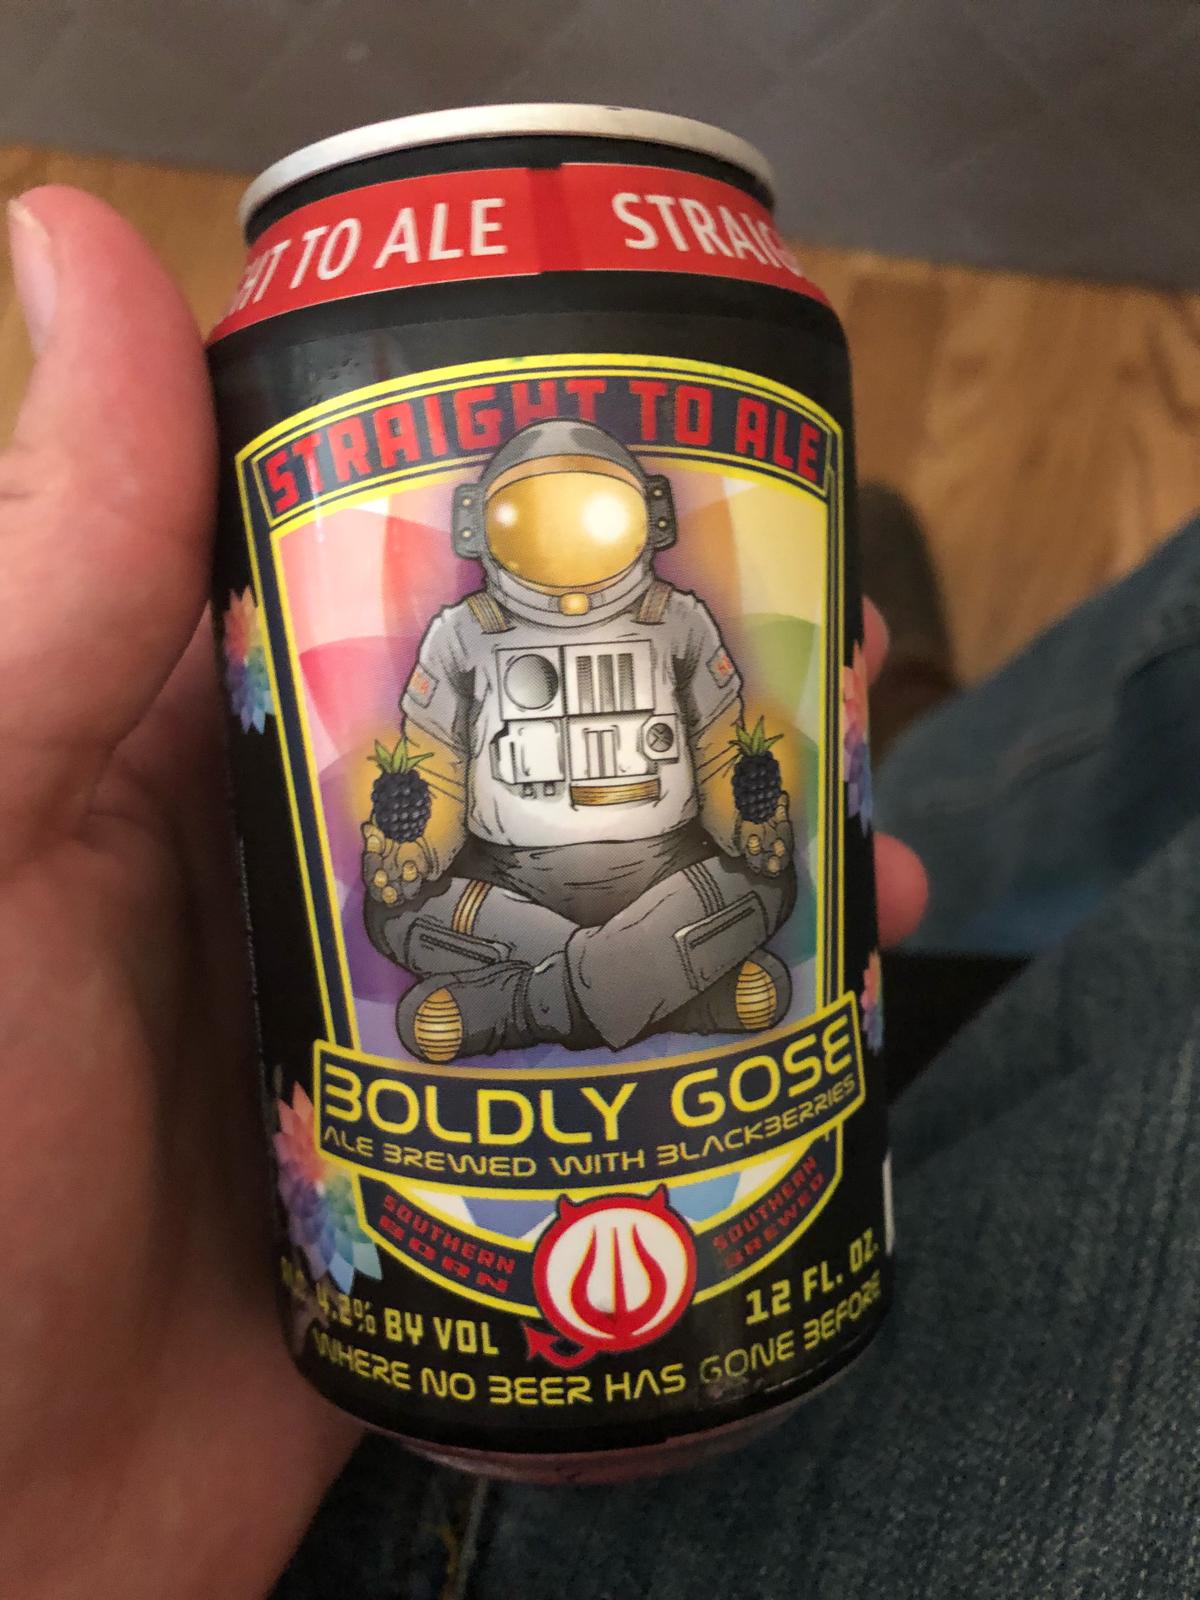 Boldly Gose Ale